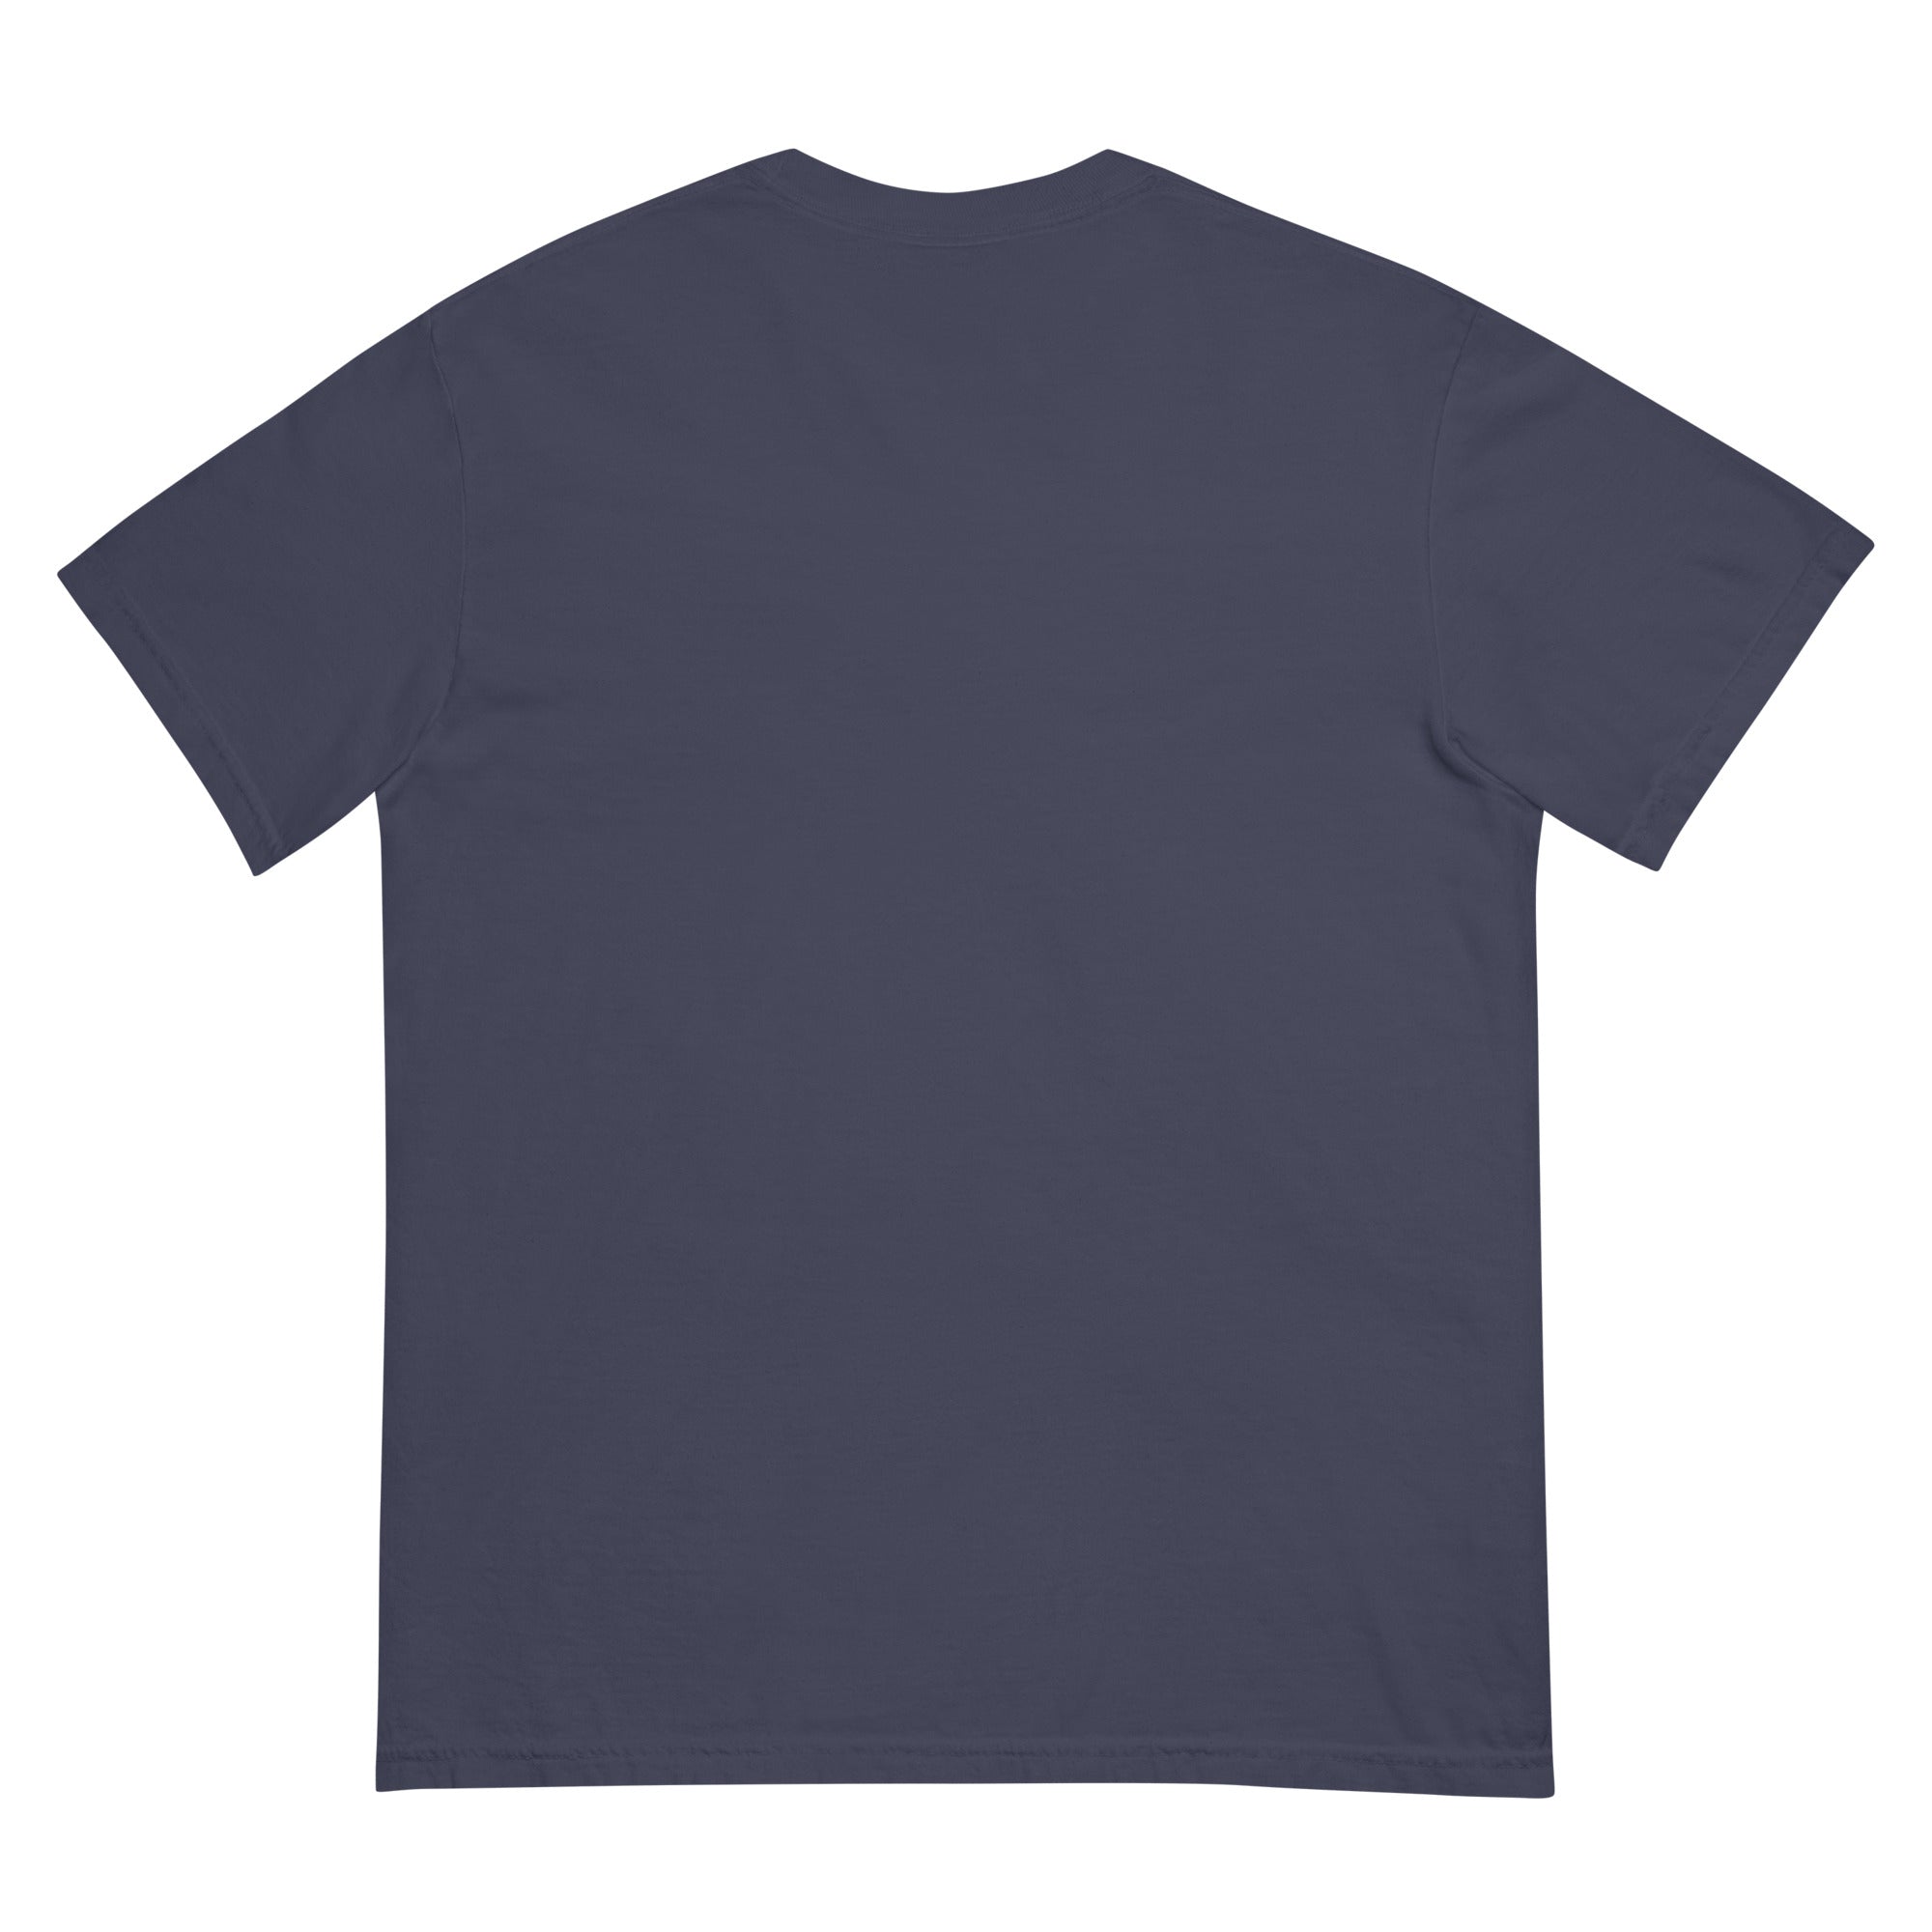 Reagan Bush 1984 Campaign Men’s Garment-dyed Heavyweight Reproduction T-shirt